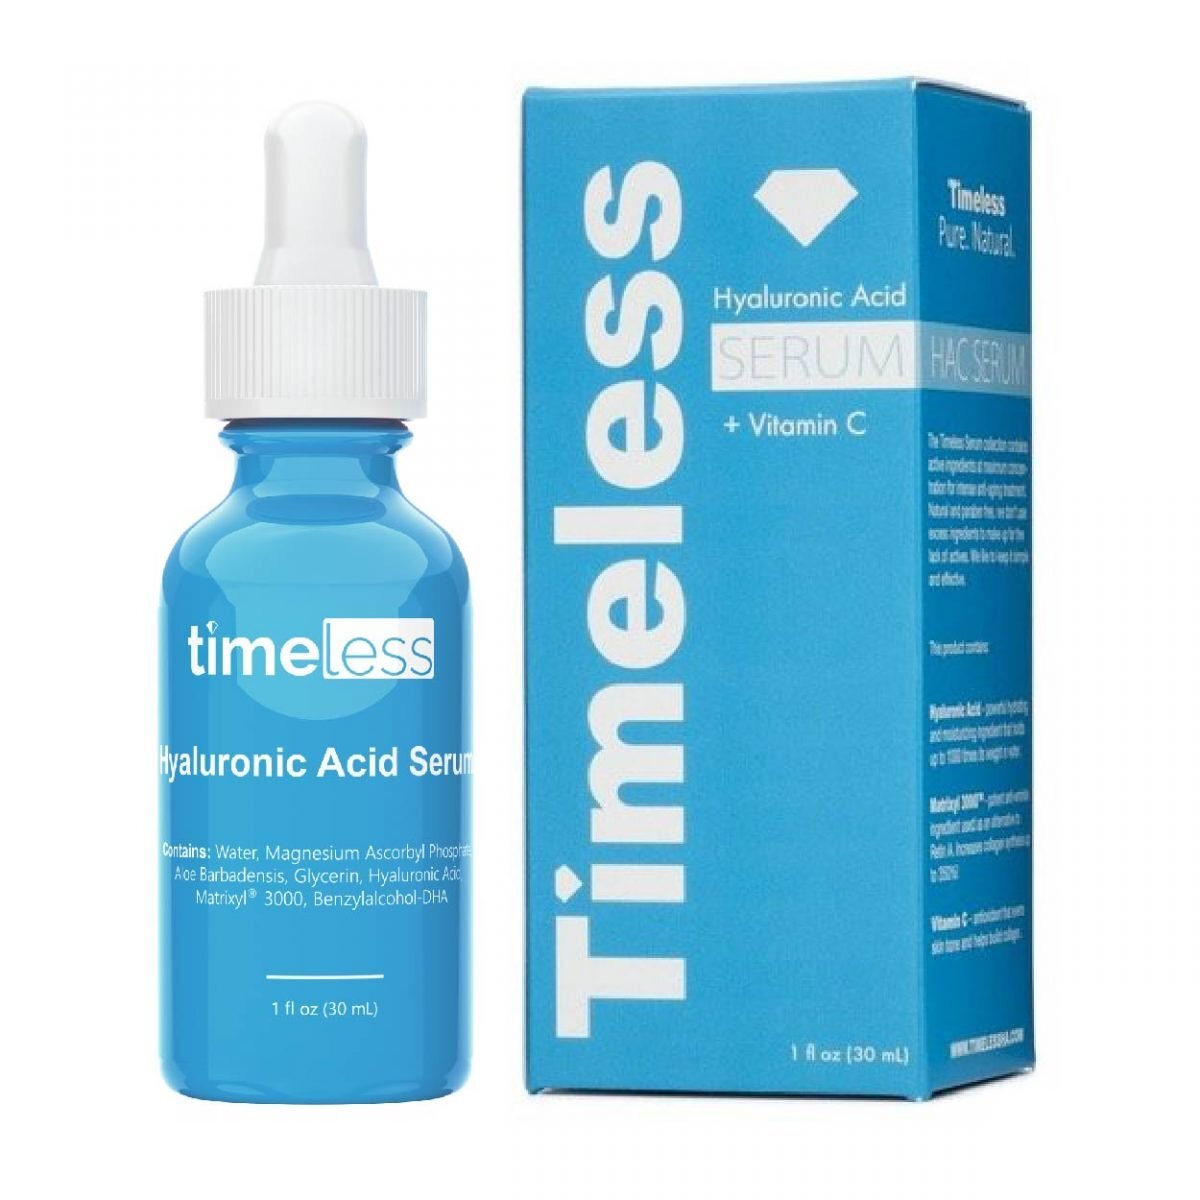 Timeless vitamin. Timeless Skin Care косметика. Skin Care сыворотка. Сыворотка для лица корейская с гиалуроном. Timeless витамин с.